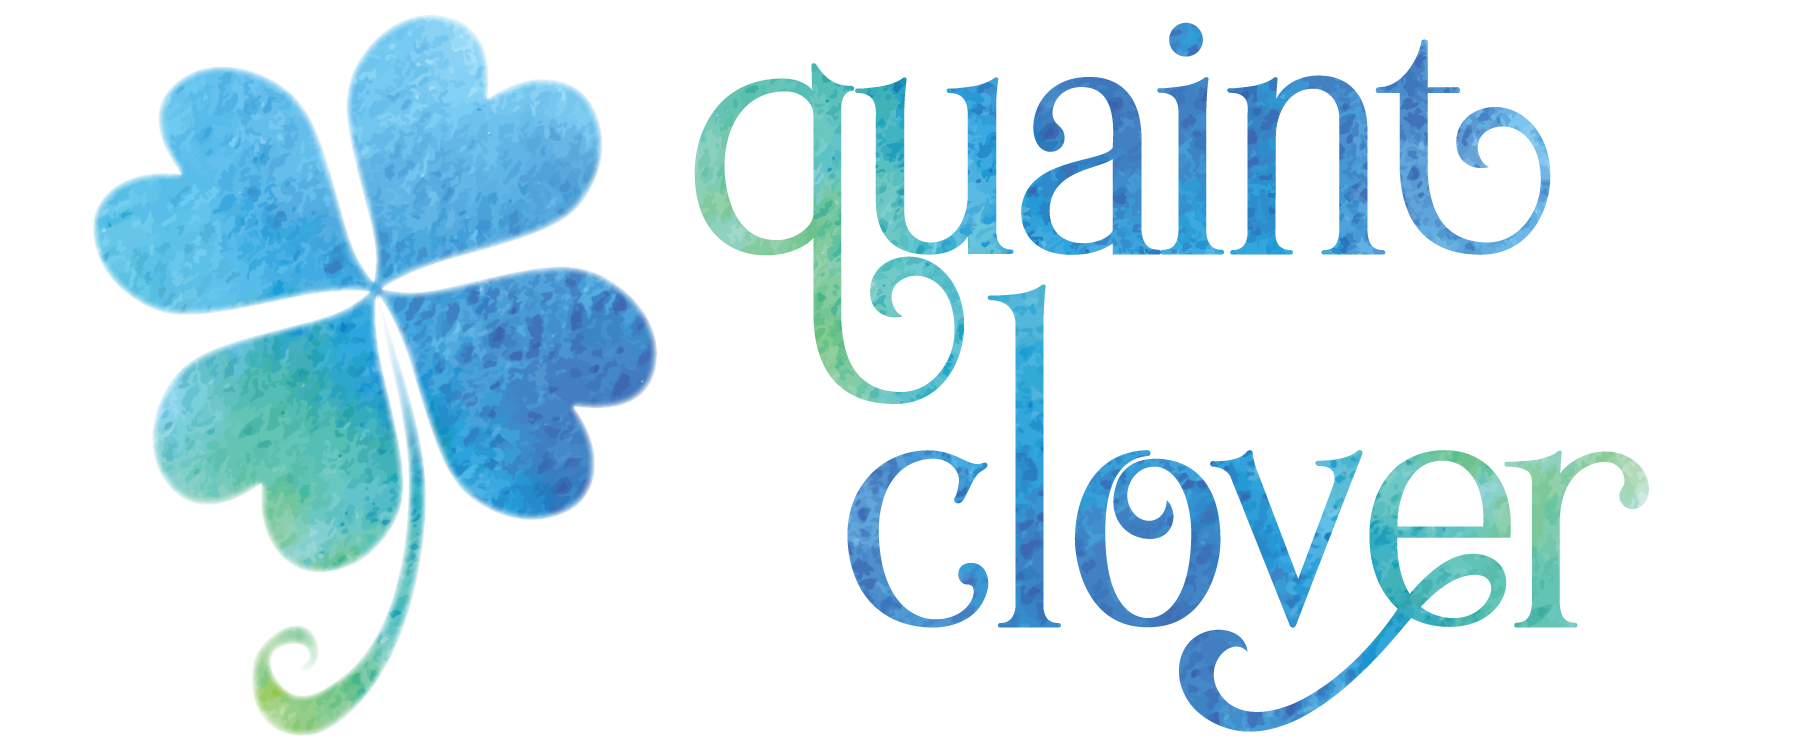 The Quaint Clover